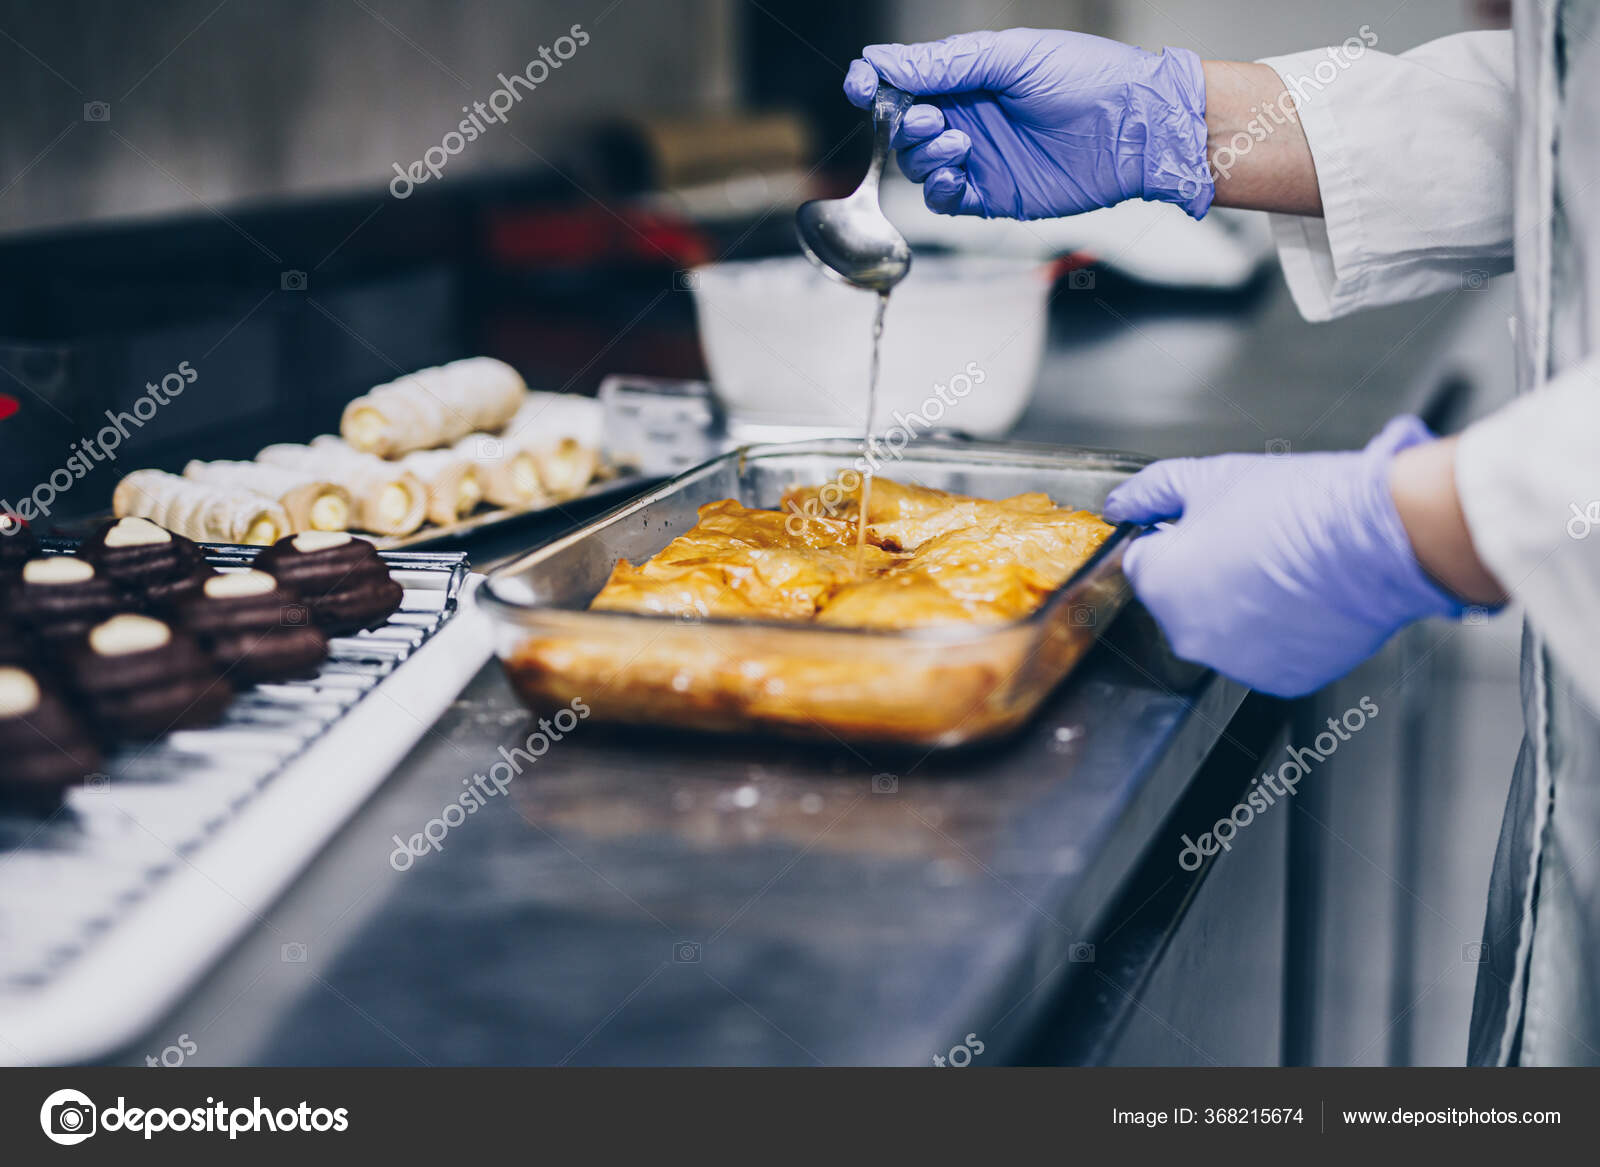 https://st3.depositphotos.com/16677798/36821/i/1600/depositphotos_368215674-stock-photo-chef-making-cookies-bakery-work.jpg